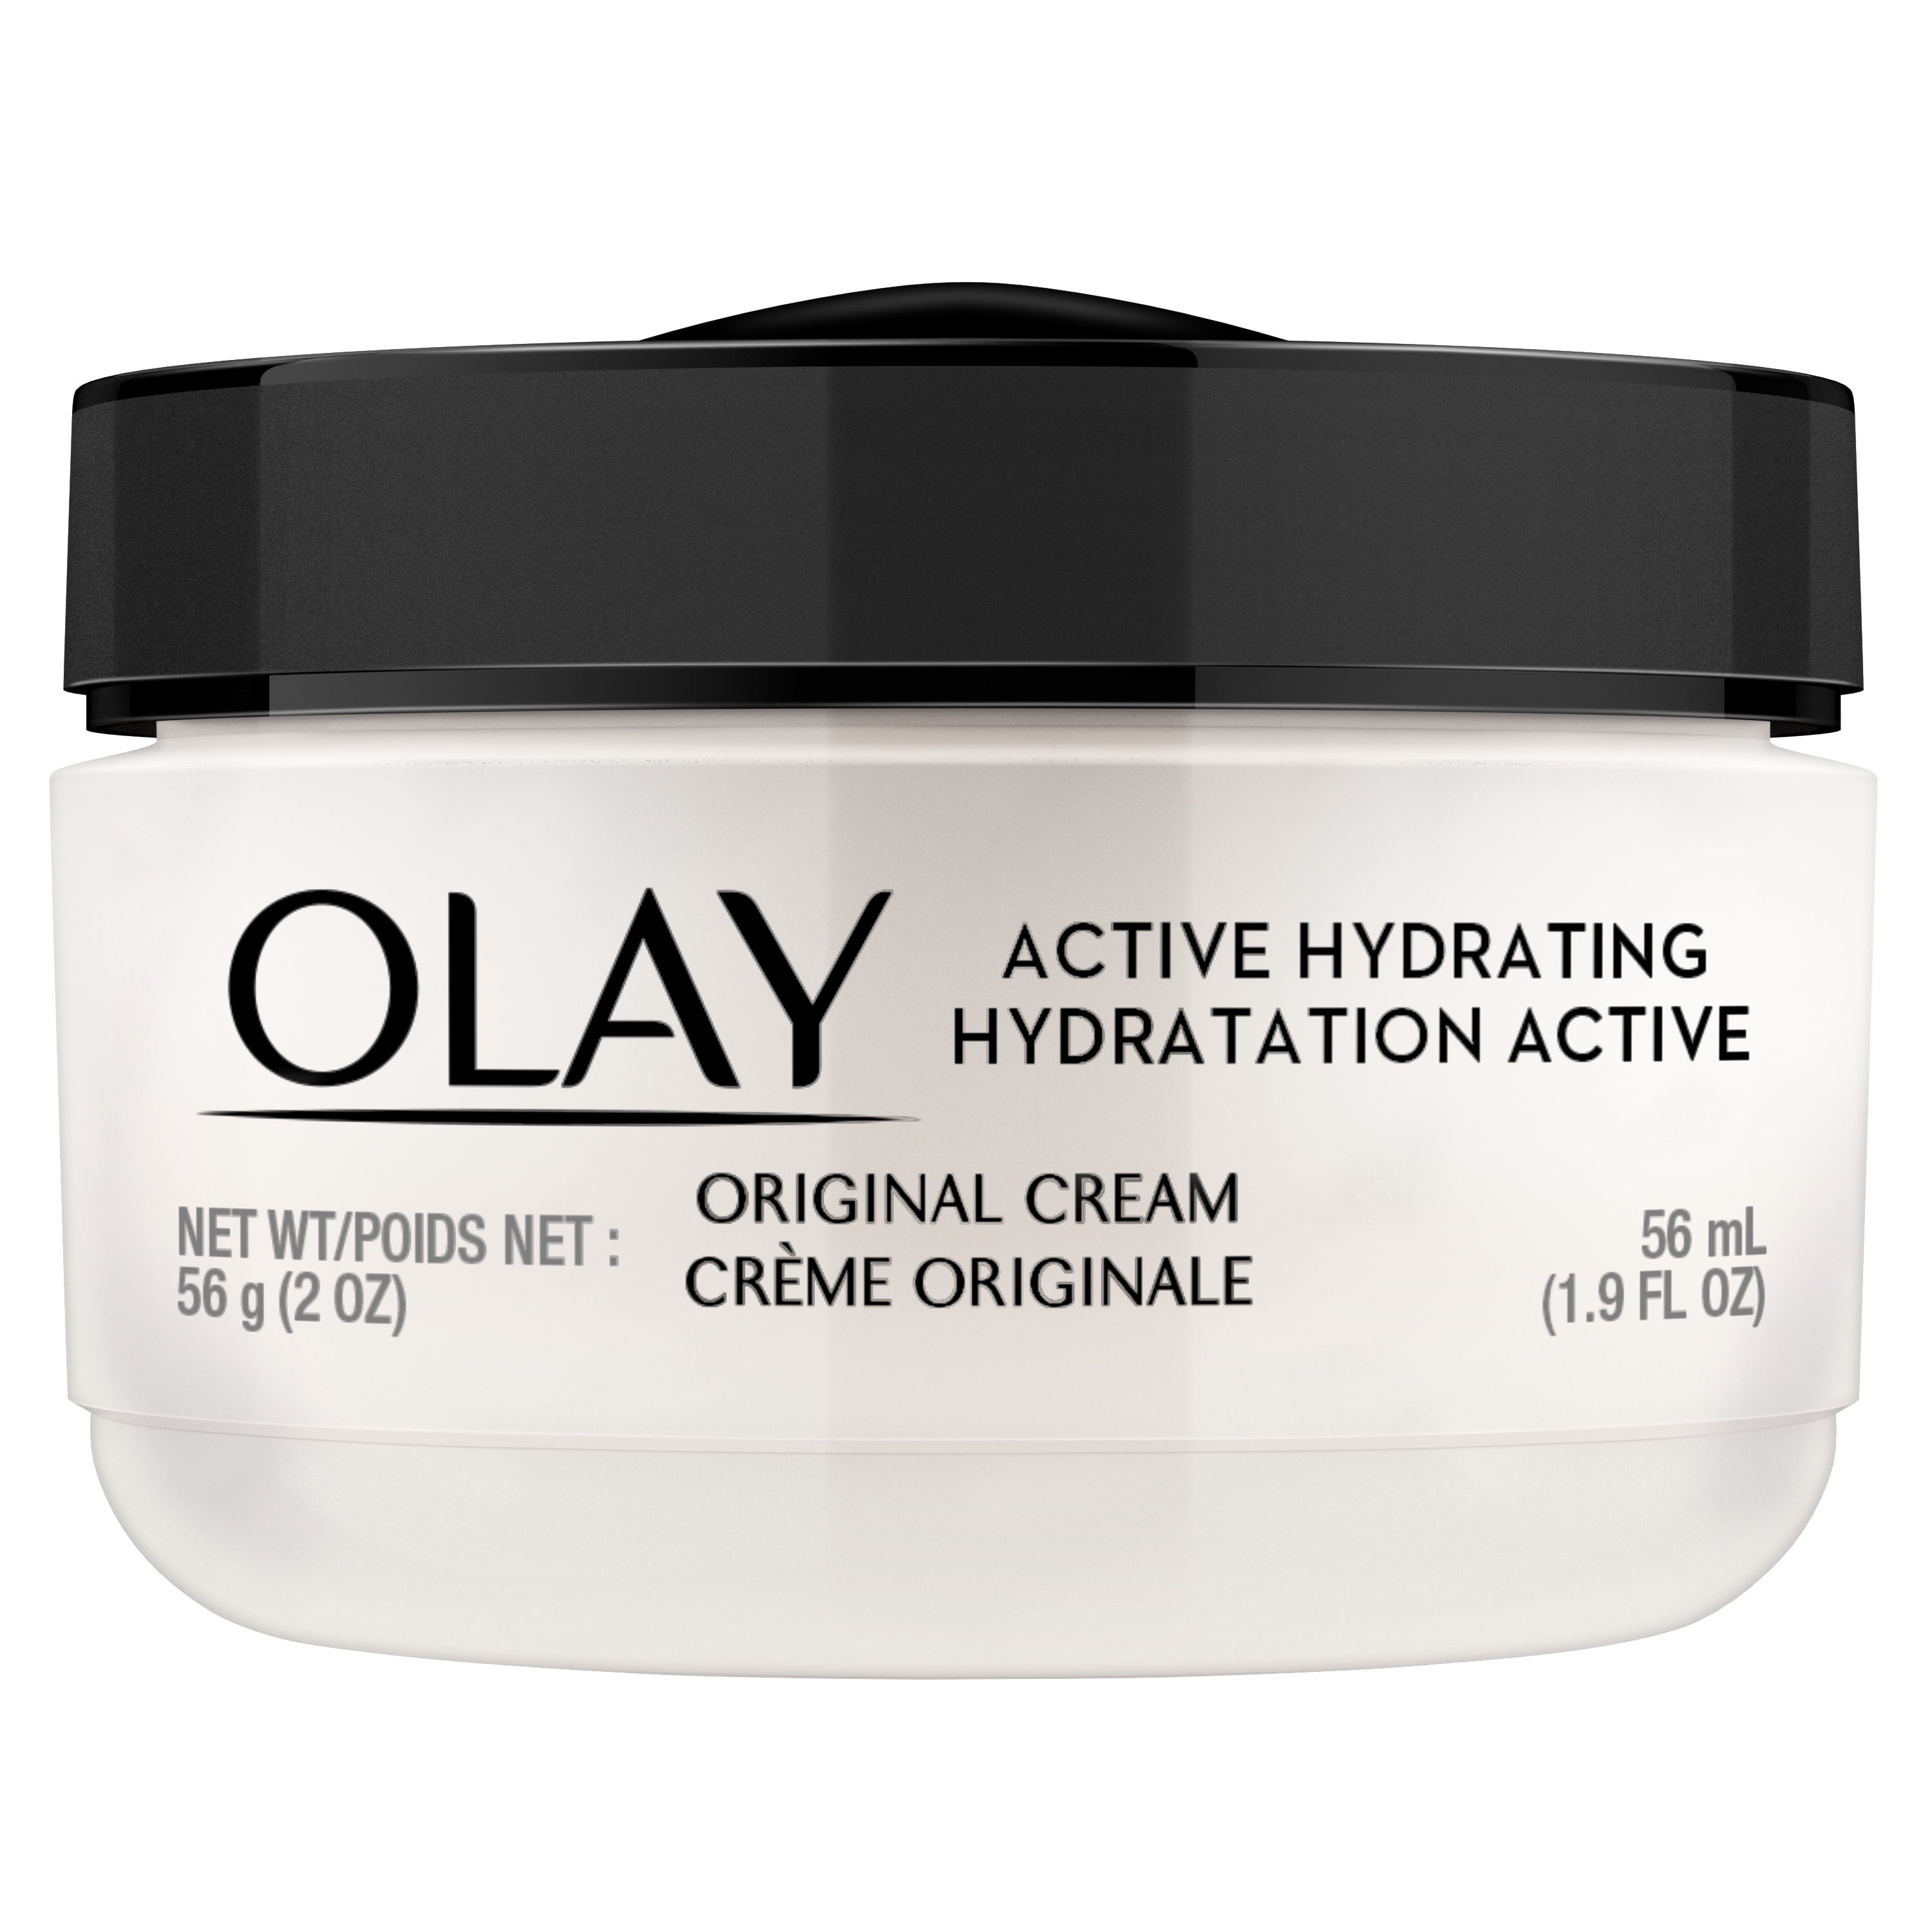 Olay Active Hydrating Face Cream for Women, Original, 1.9 fl oz